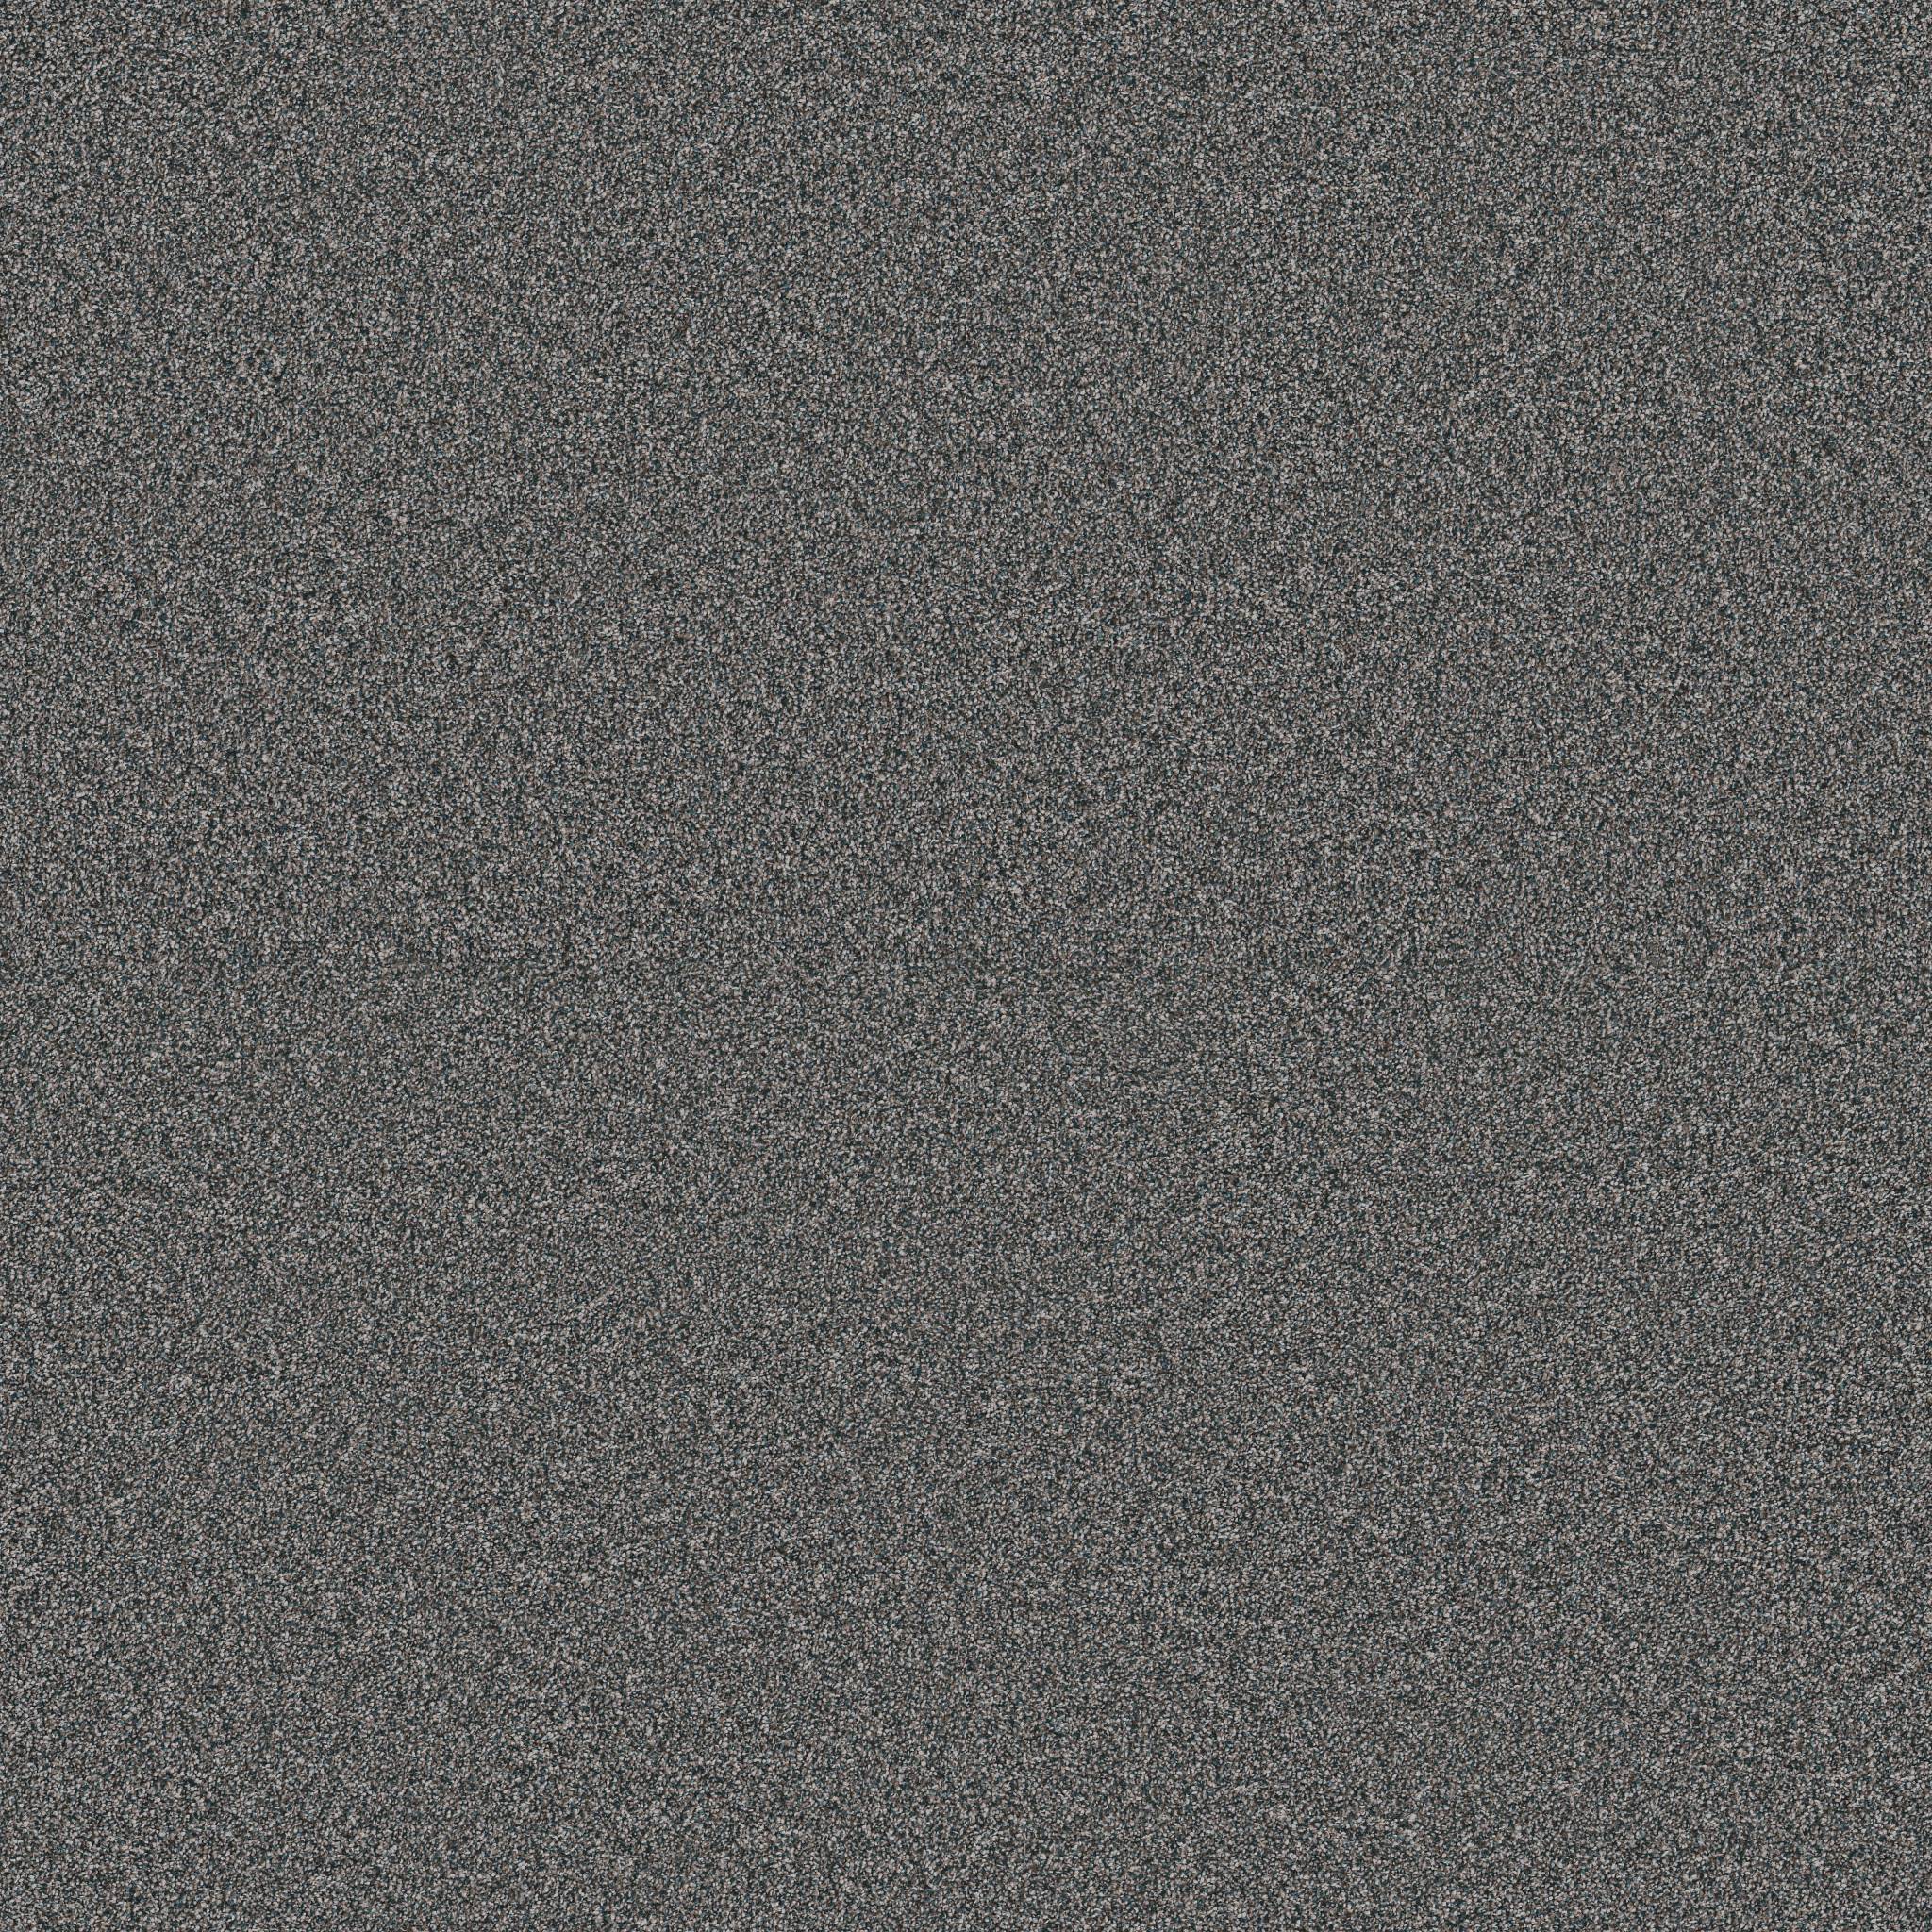 Kaleidoscope Carpet - Jade Gray Zoomed Swatch Image